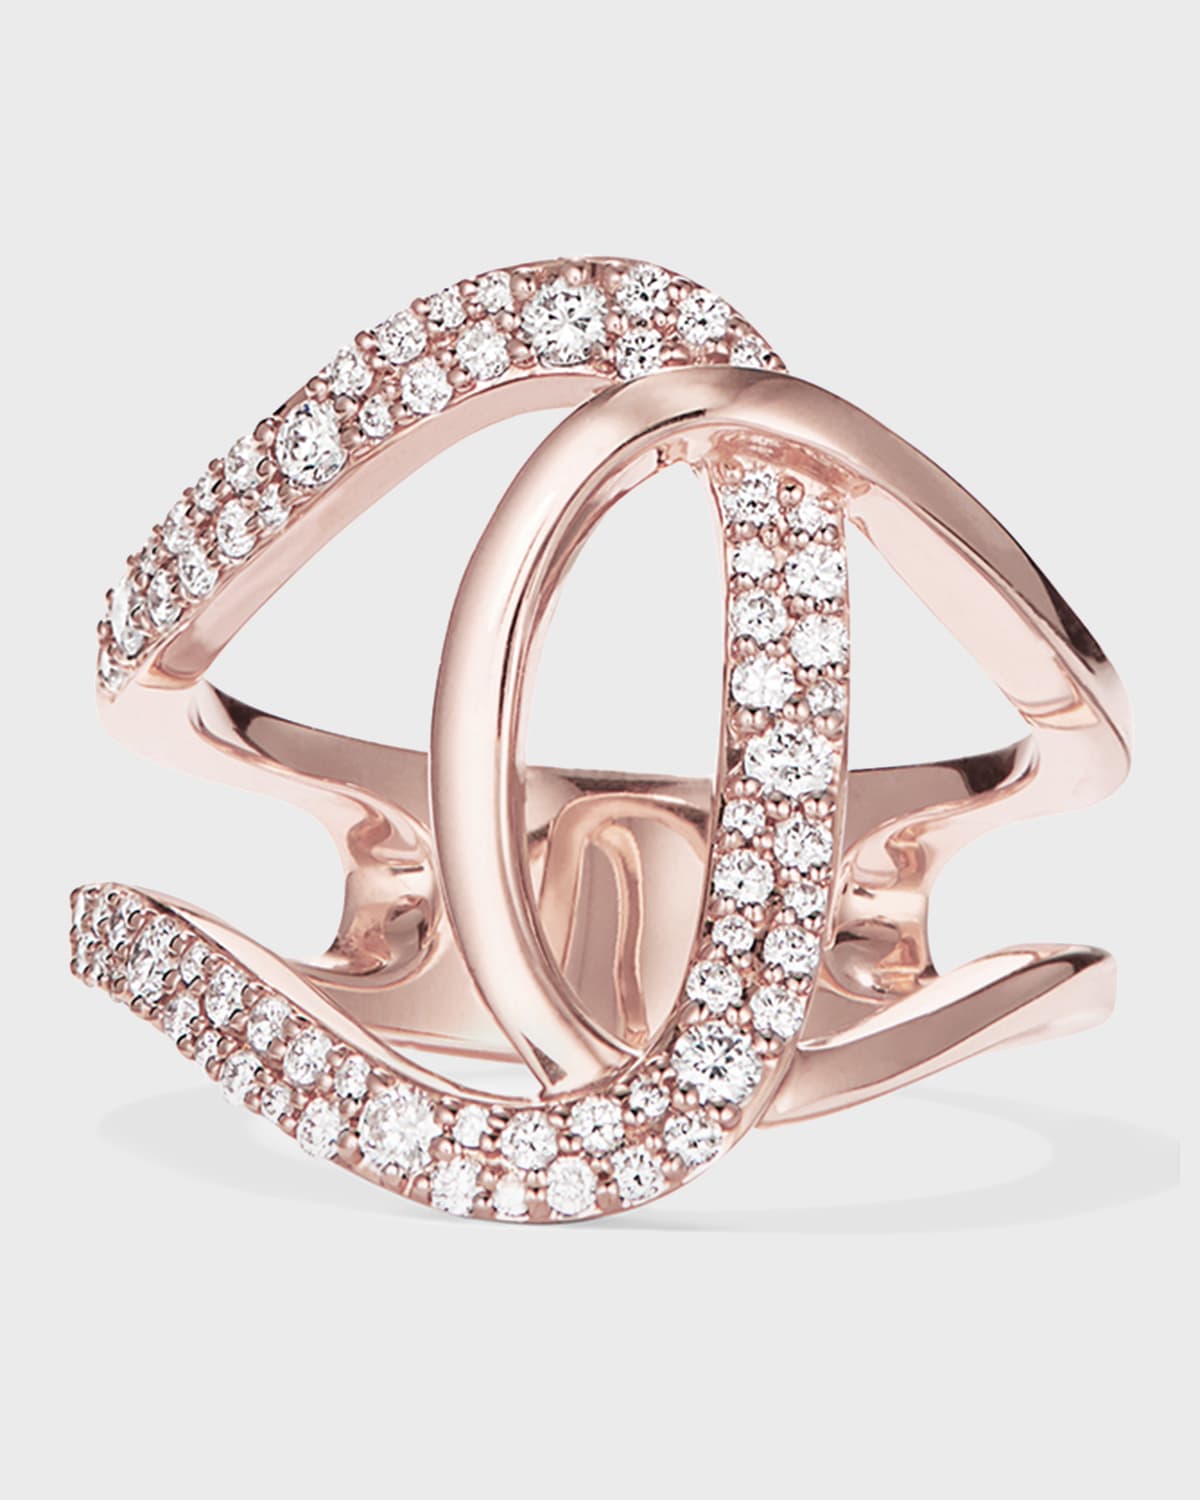 LANA JEWELRY Mega Flawless Illuminating 14k Rose Gold Diamond Ring, Size 7